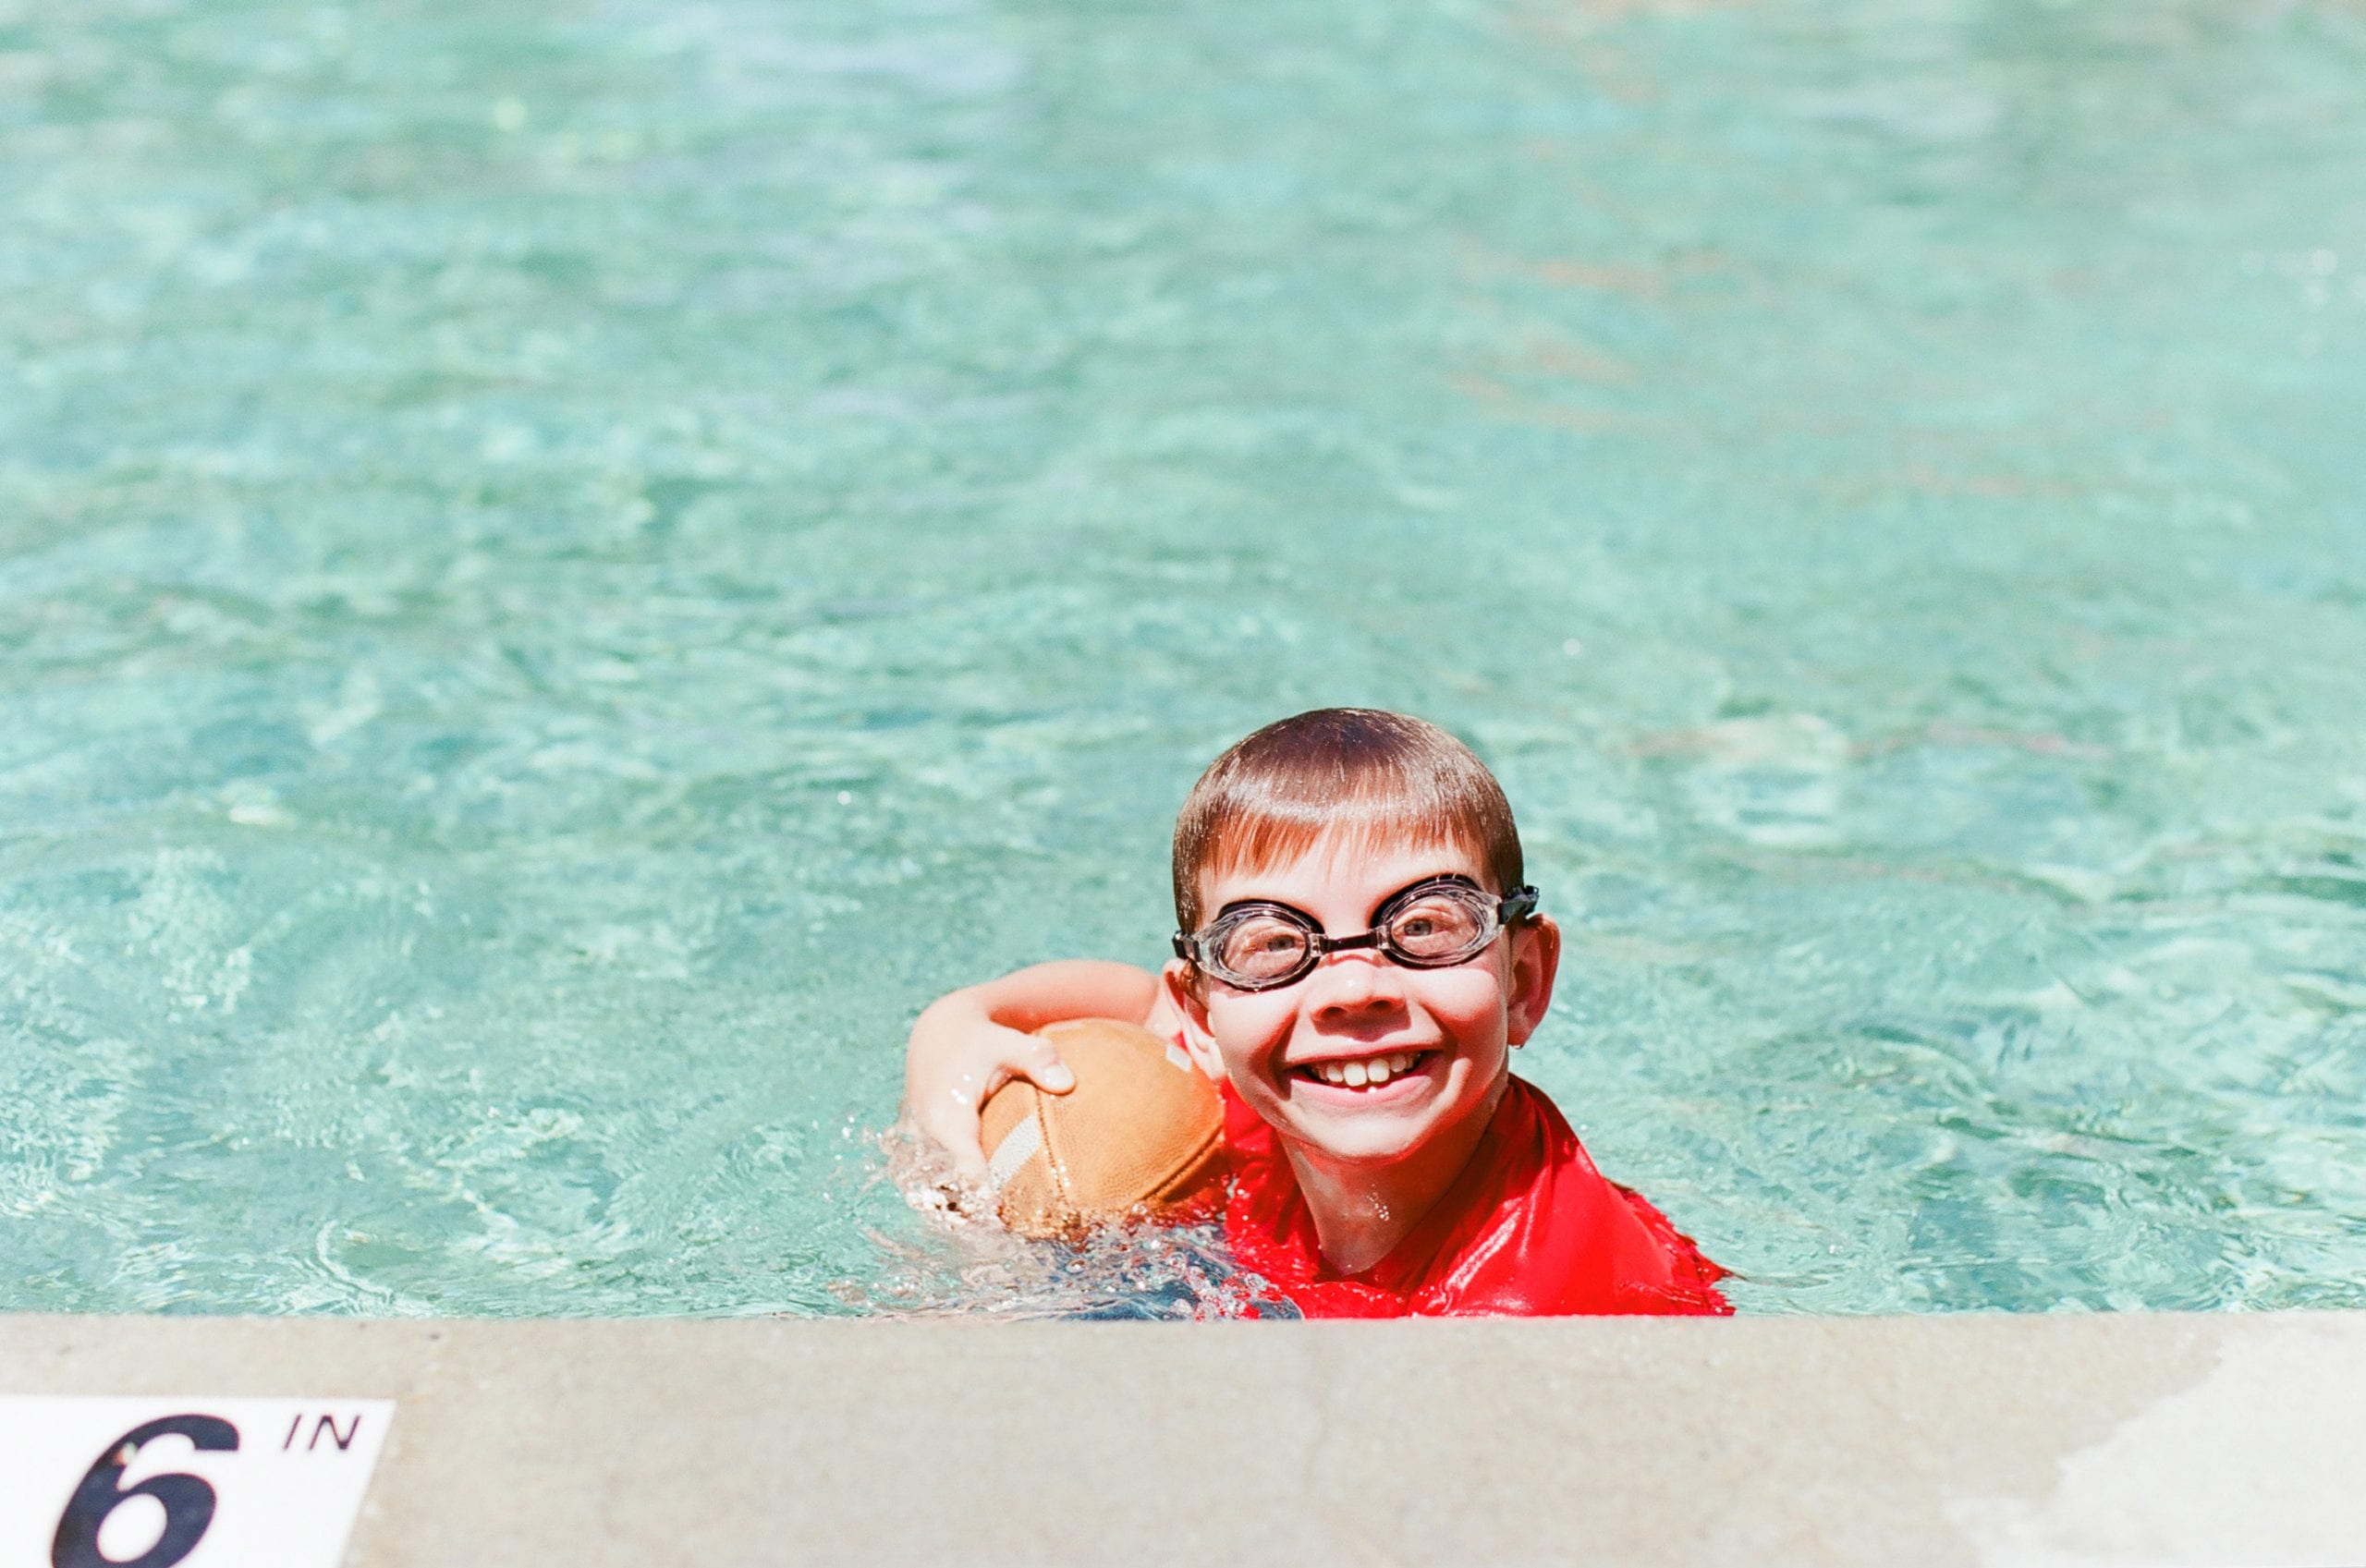 Kodak Ektar 100 Kid in Pool with goggles photo